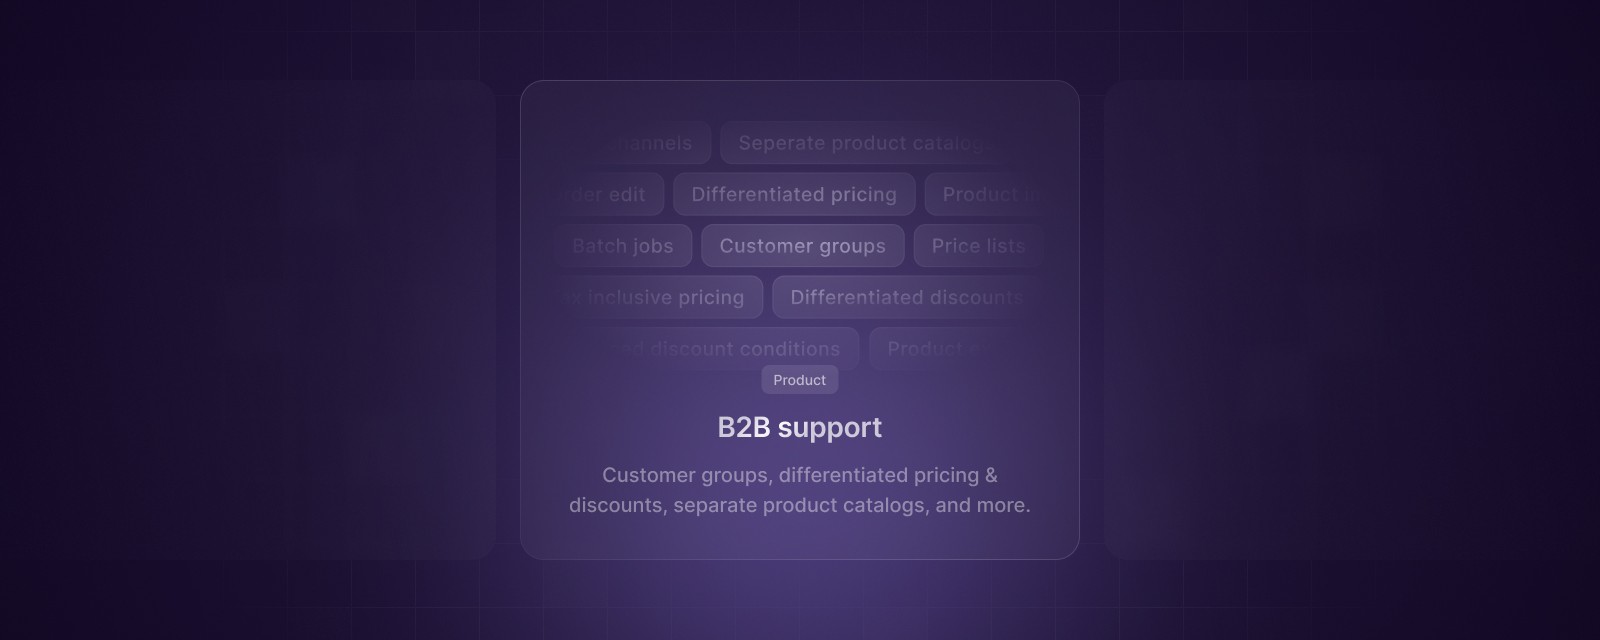 B2B support
